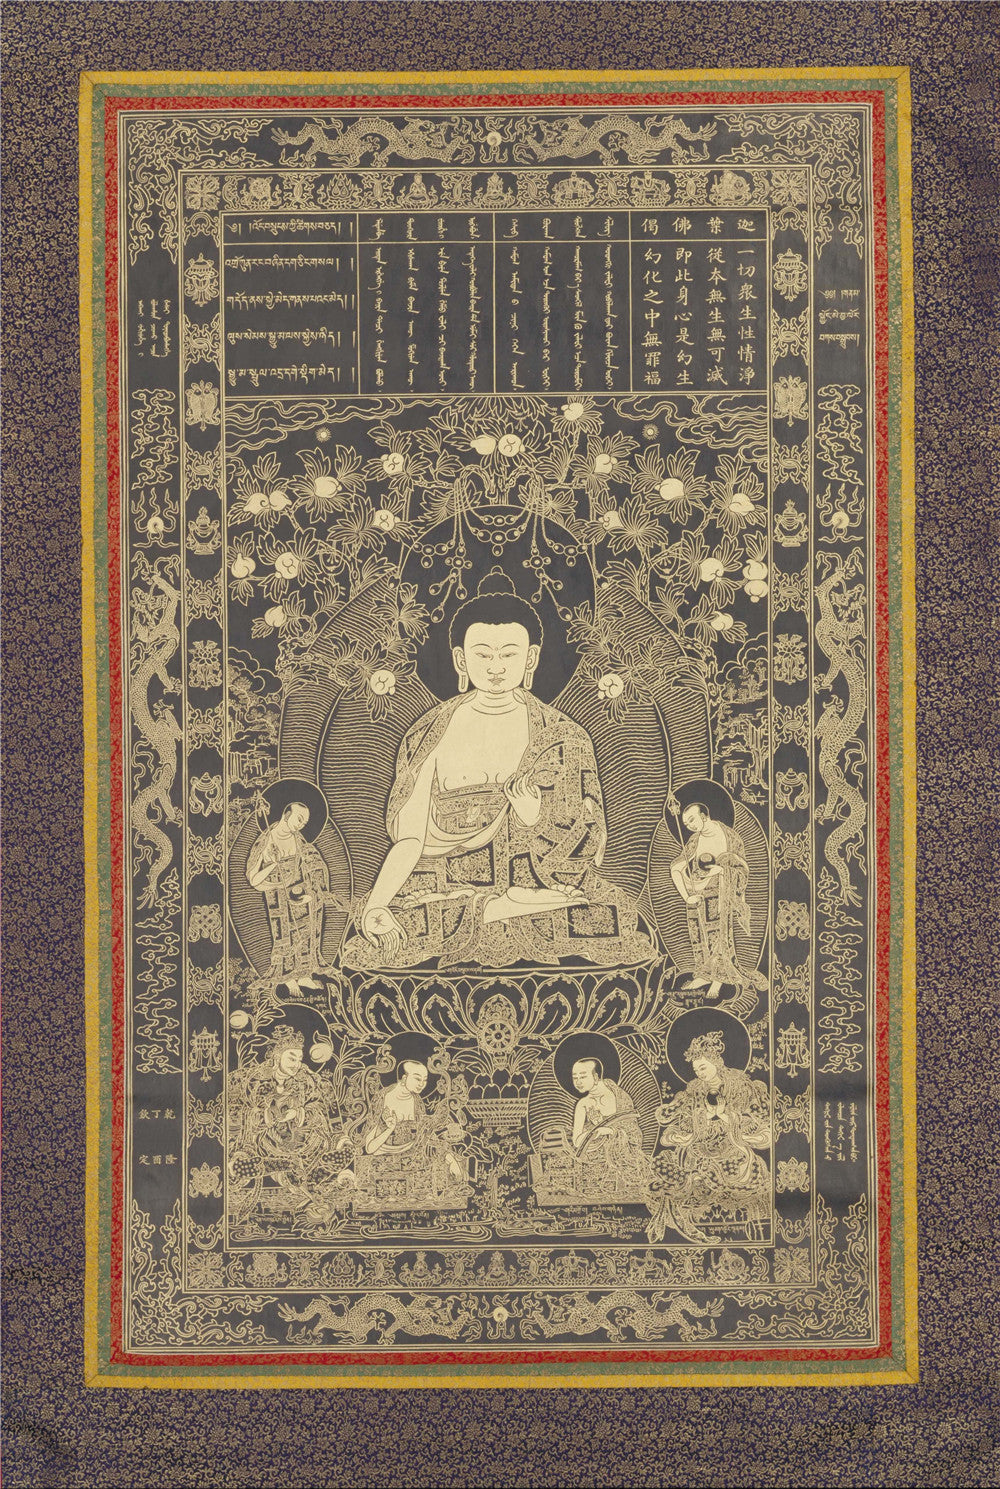 Gandhanra Tibetan Thangka Art - Kassapa Buddha - from Kathok Monastery - Giclee Print with Mineral Pigments